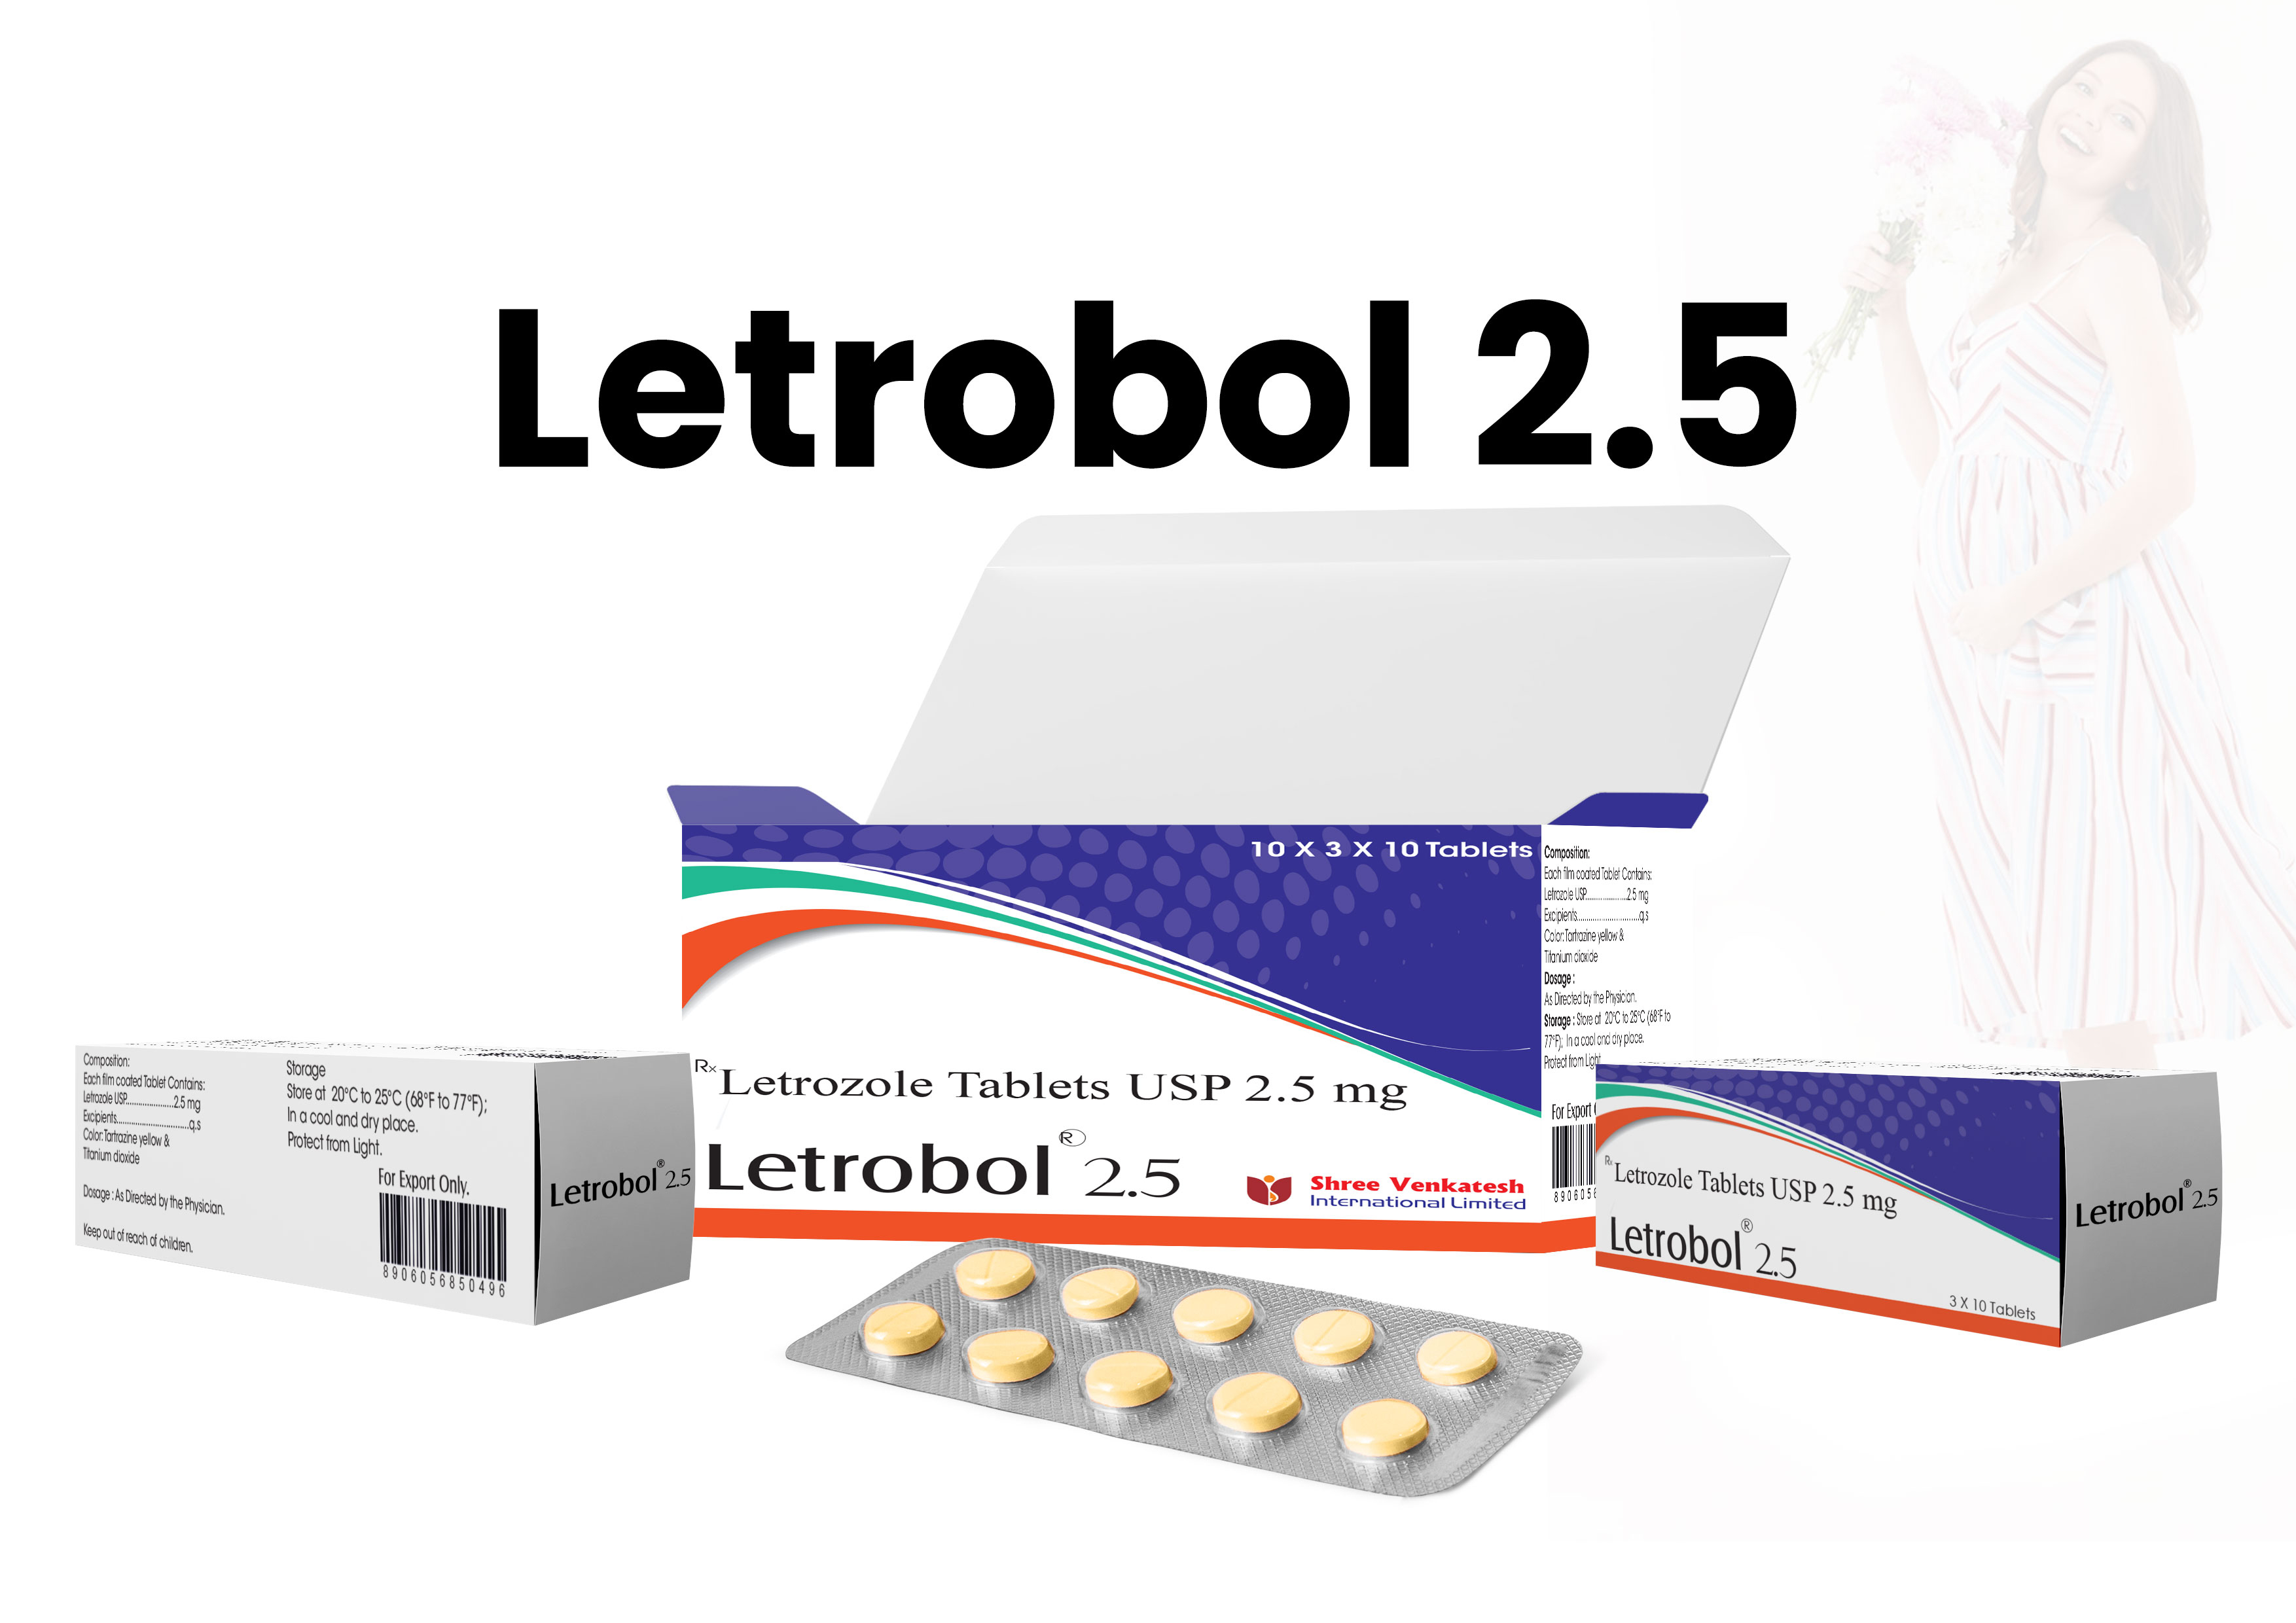 Letrozole Tablet USP 2.5 mg- Letrobol 2.5